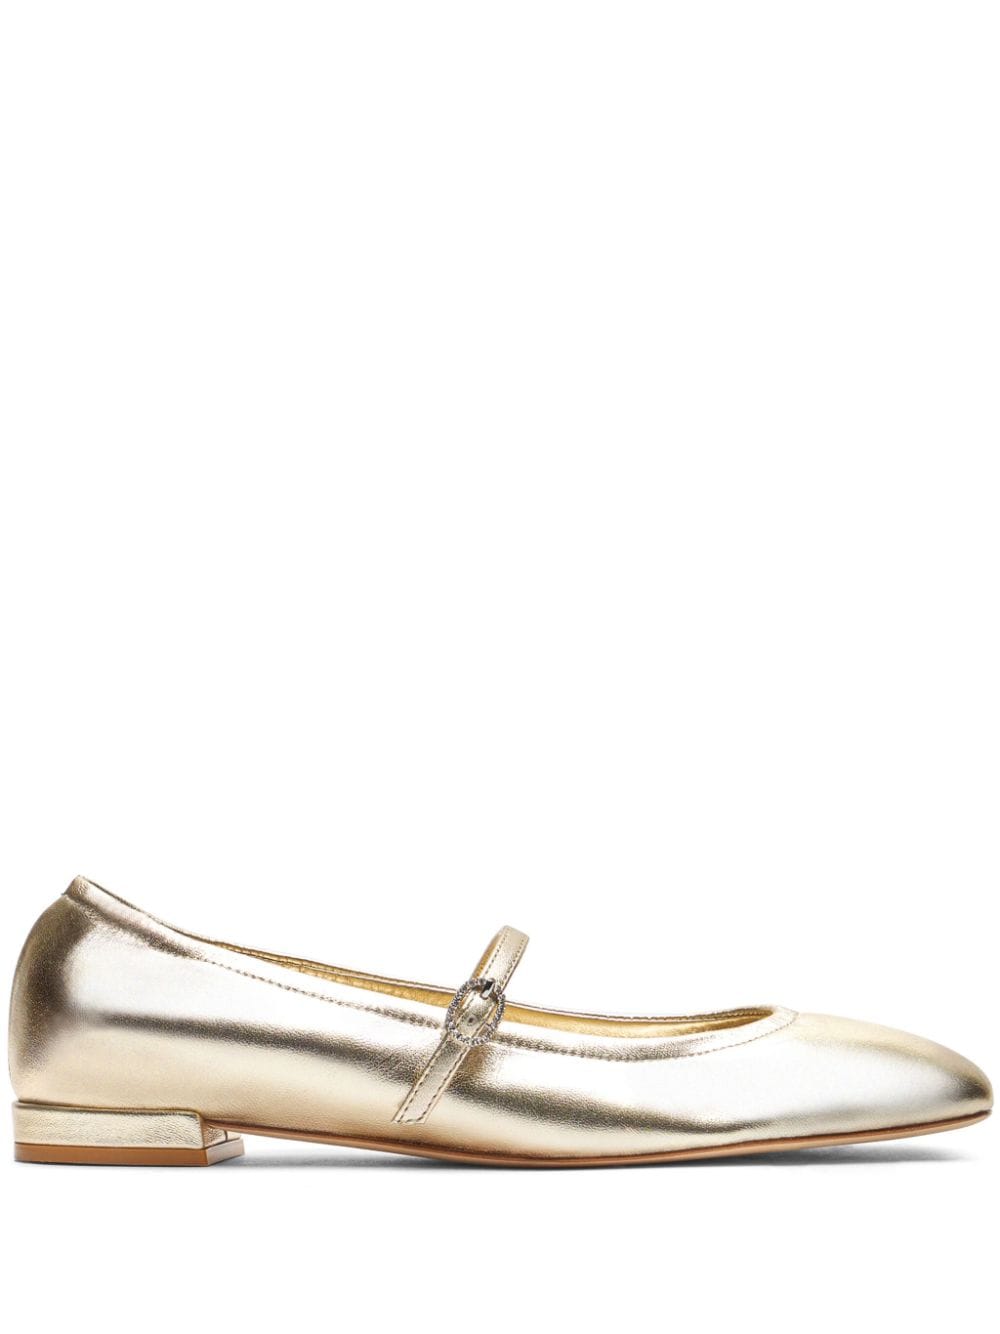 Stuart Weitzman Claris crystal-embellished leather ballerina shoes Gold